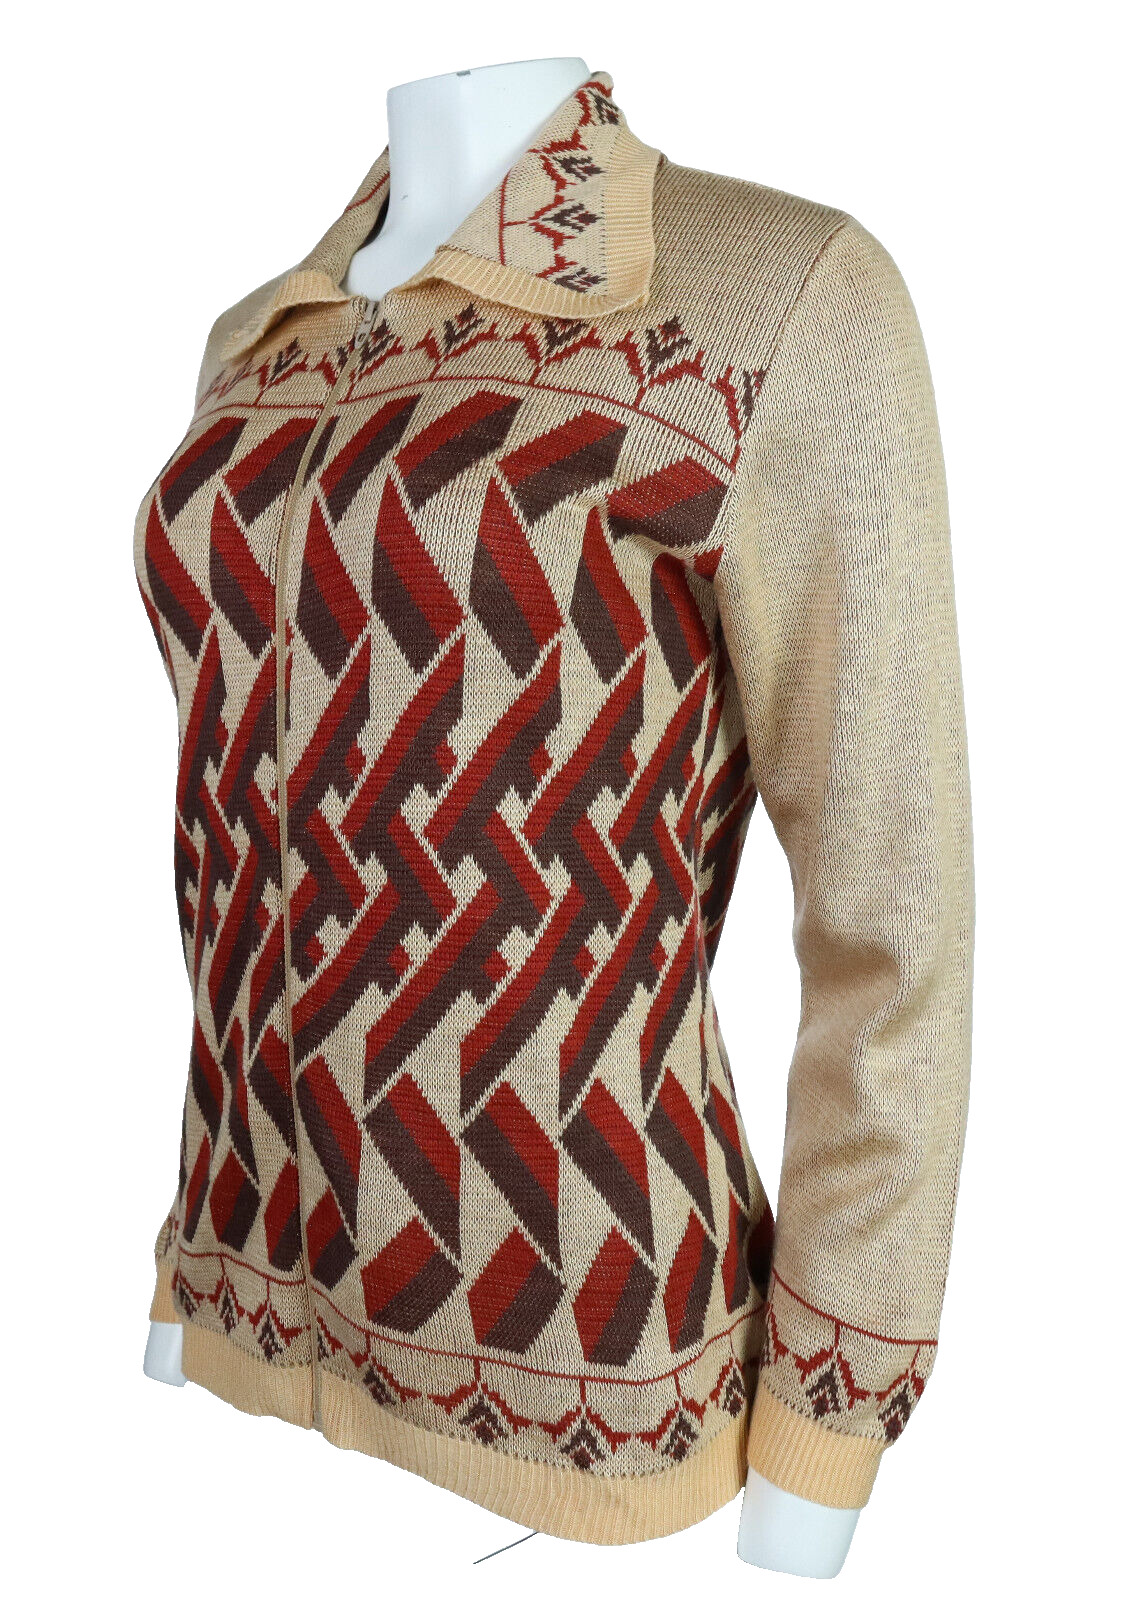 Vintage 70s JC PENNEY USA Women’s M Brown Acrylic Zip Sweater Cardigan Lightwt